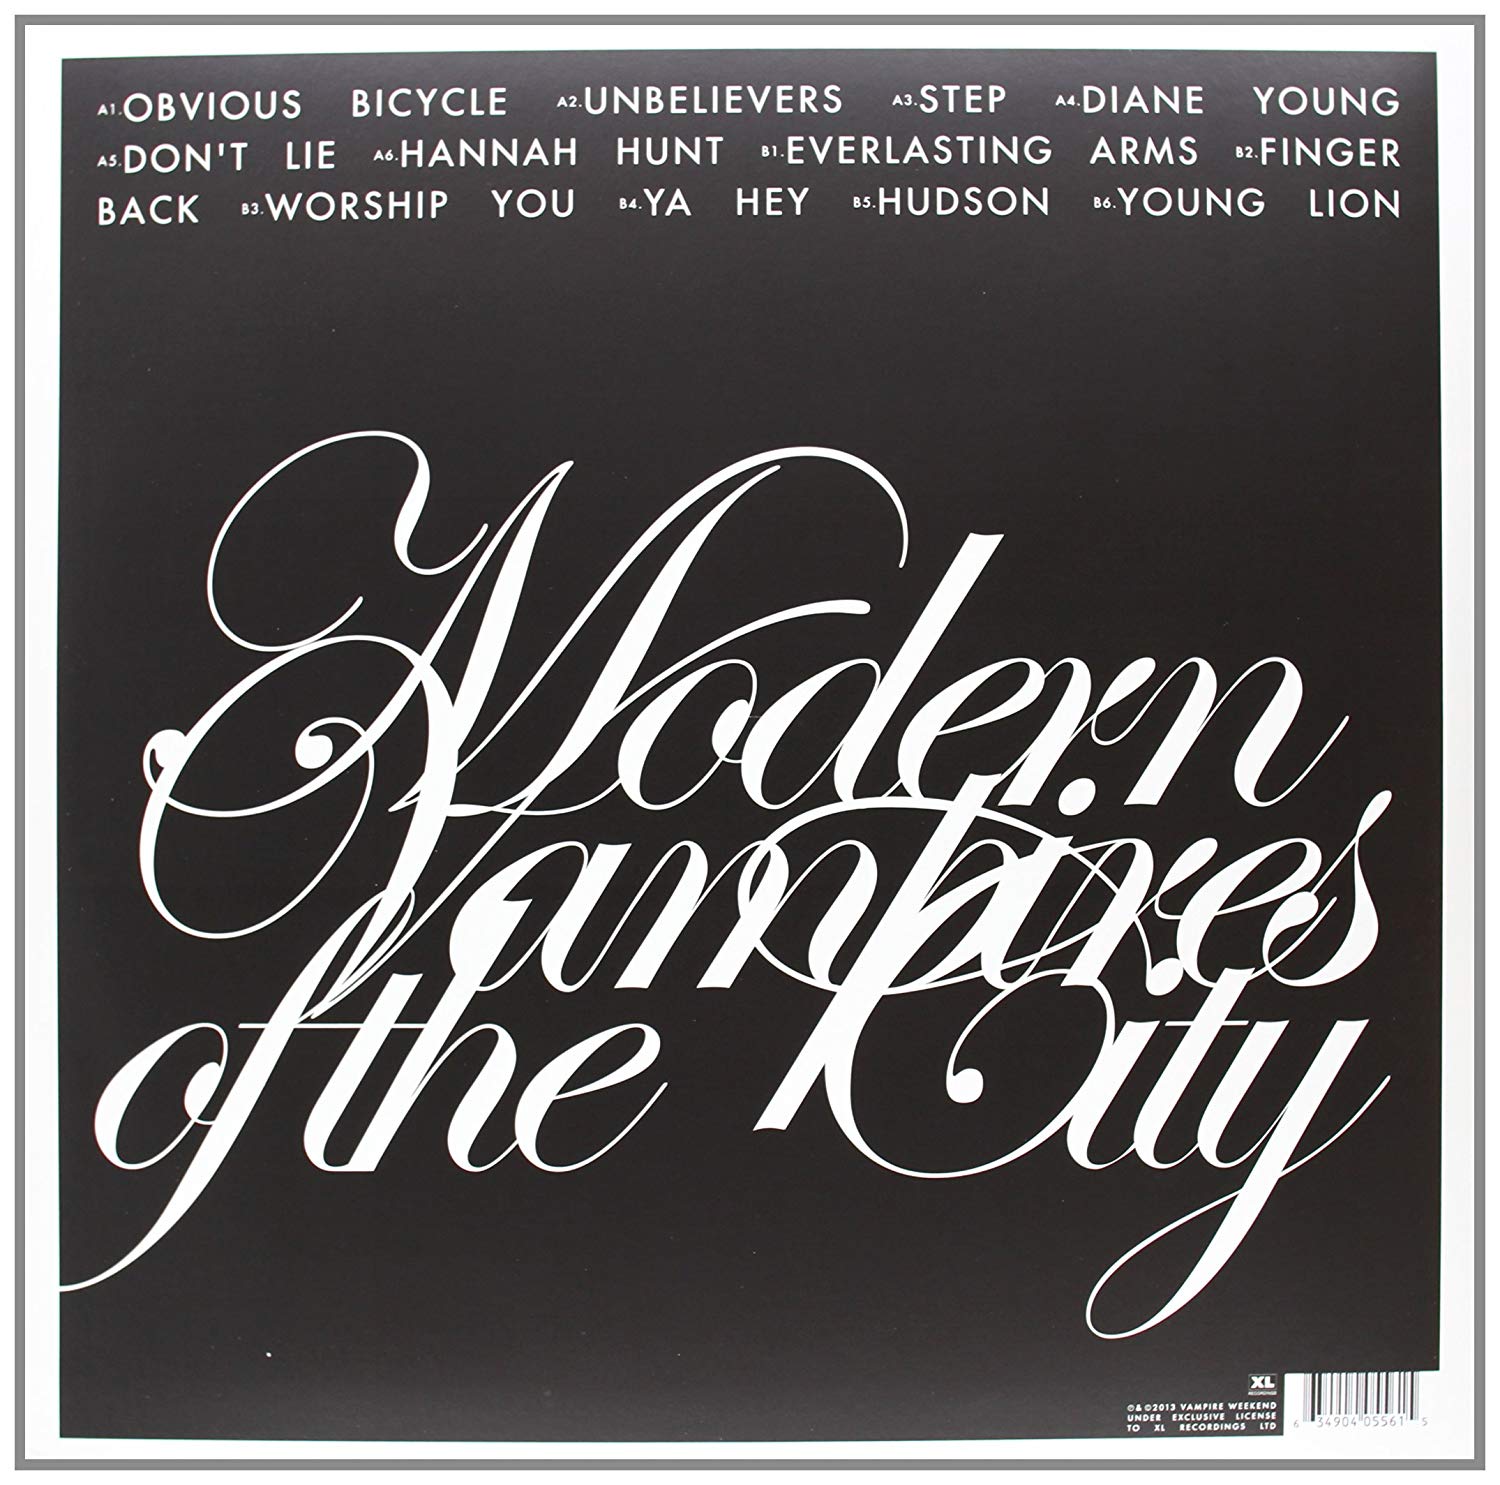 Vampire Weekend (뱀파이어 위켄드) - Modern Vampires of The City [LP+CD Deluxe Edition]